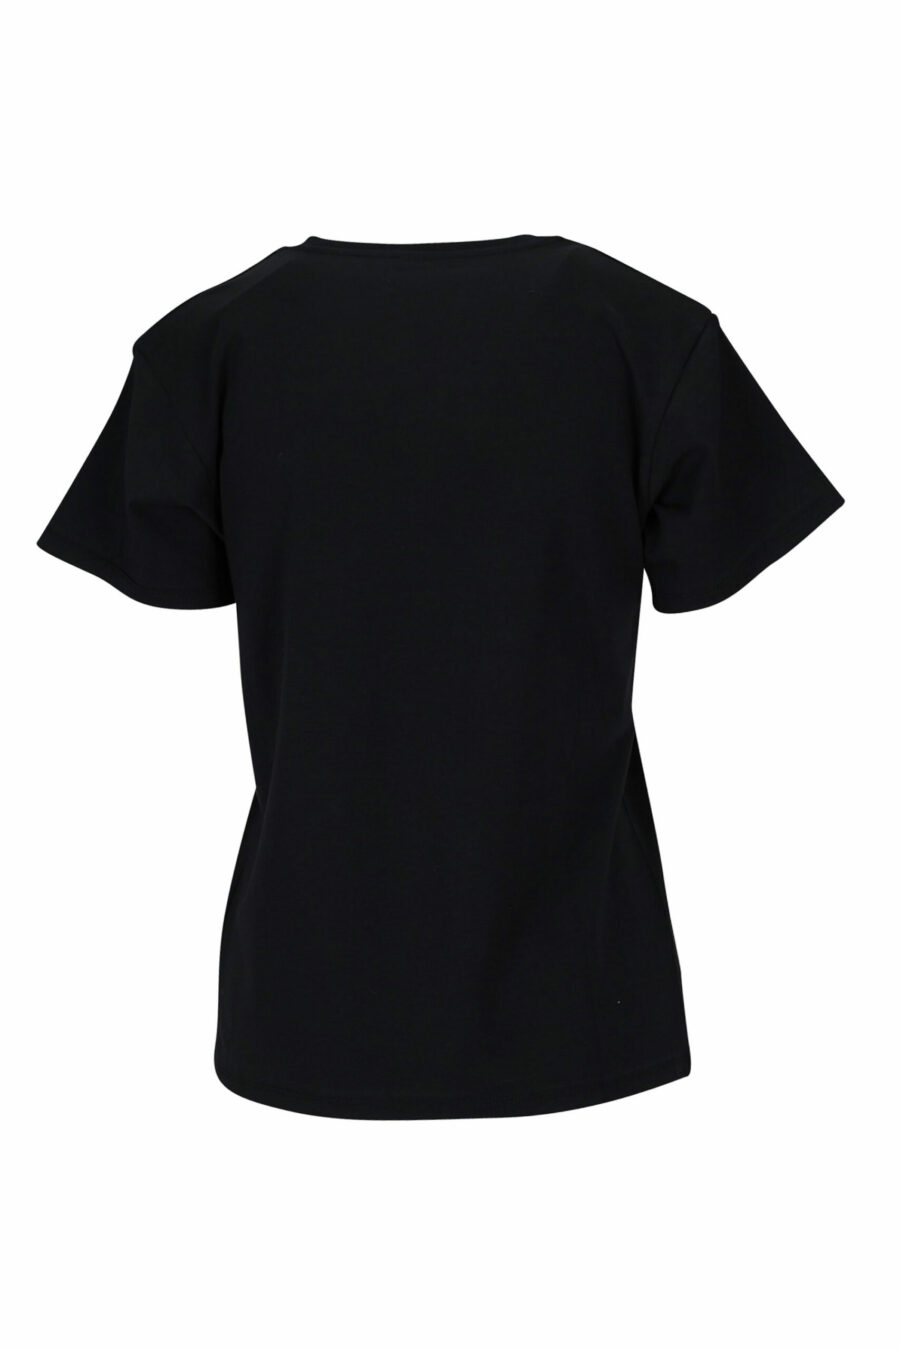 Black t-shirt with v-neck and monochrome ribbon logo - 889316614954 1 scaled